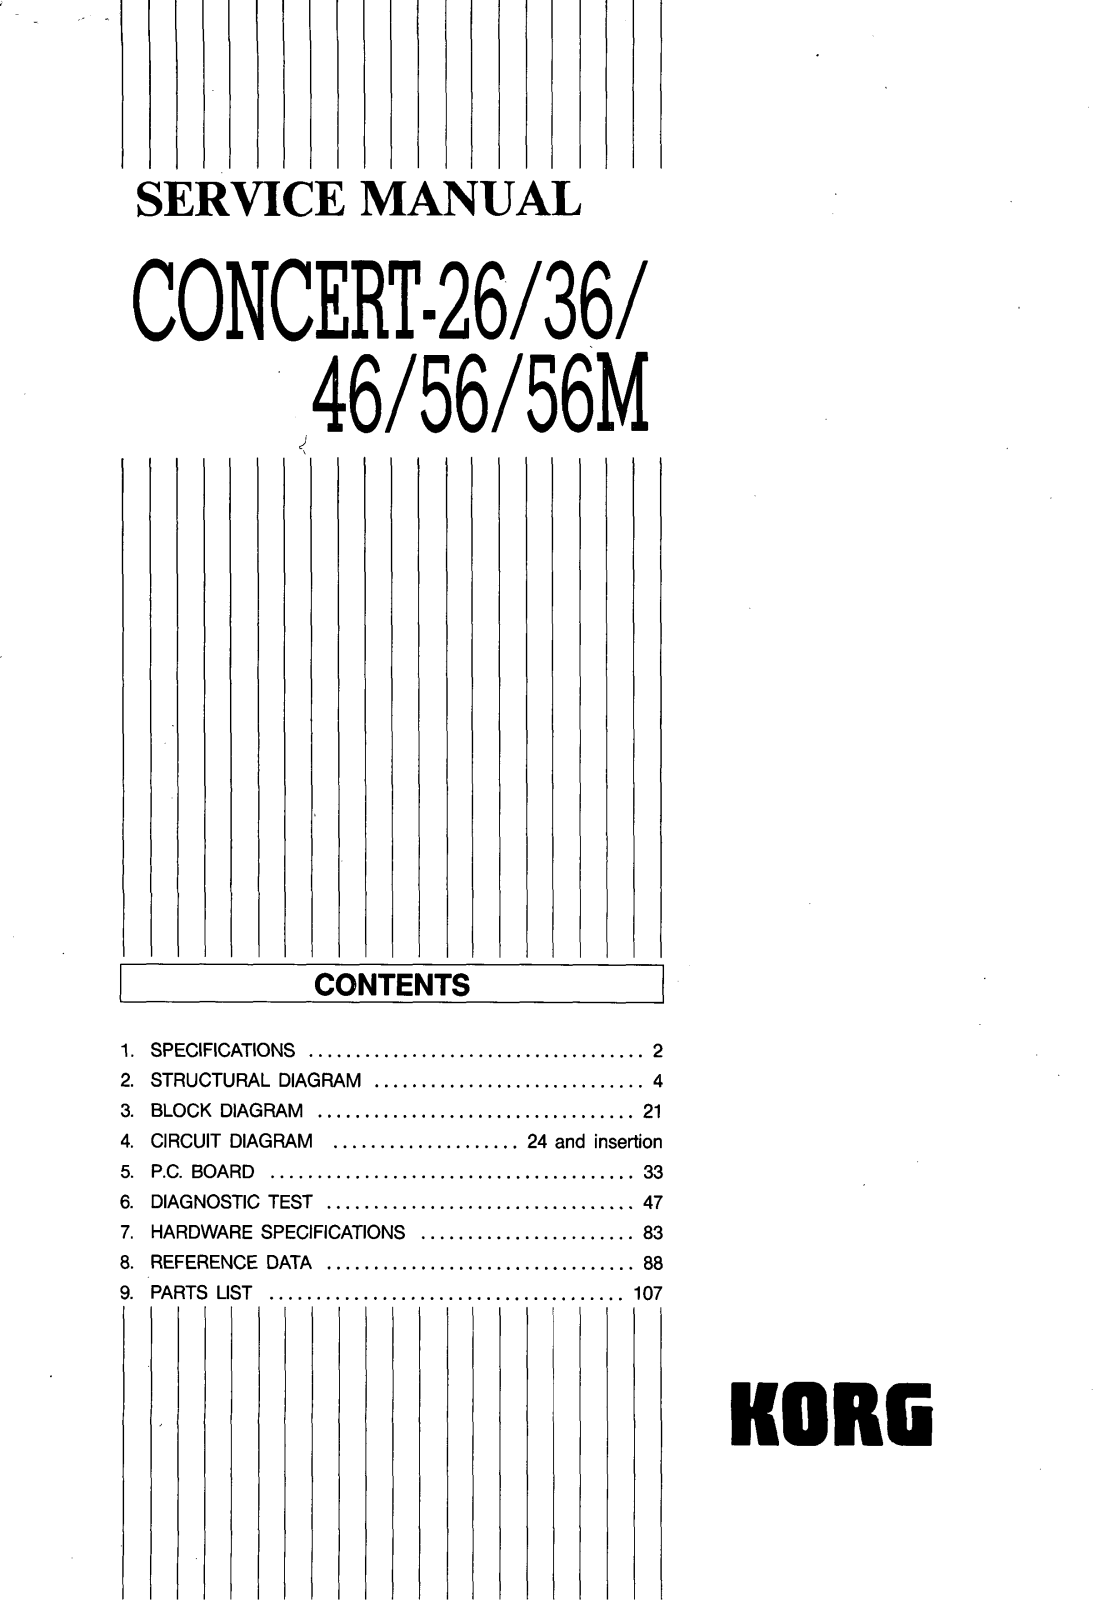 Korg Concert-56M, Concert-56, Concert-46, Concert-36, Concert-26 Service Manual